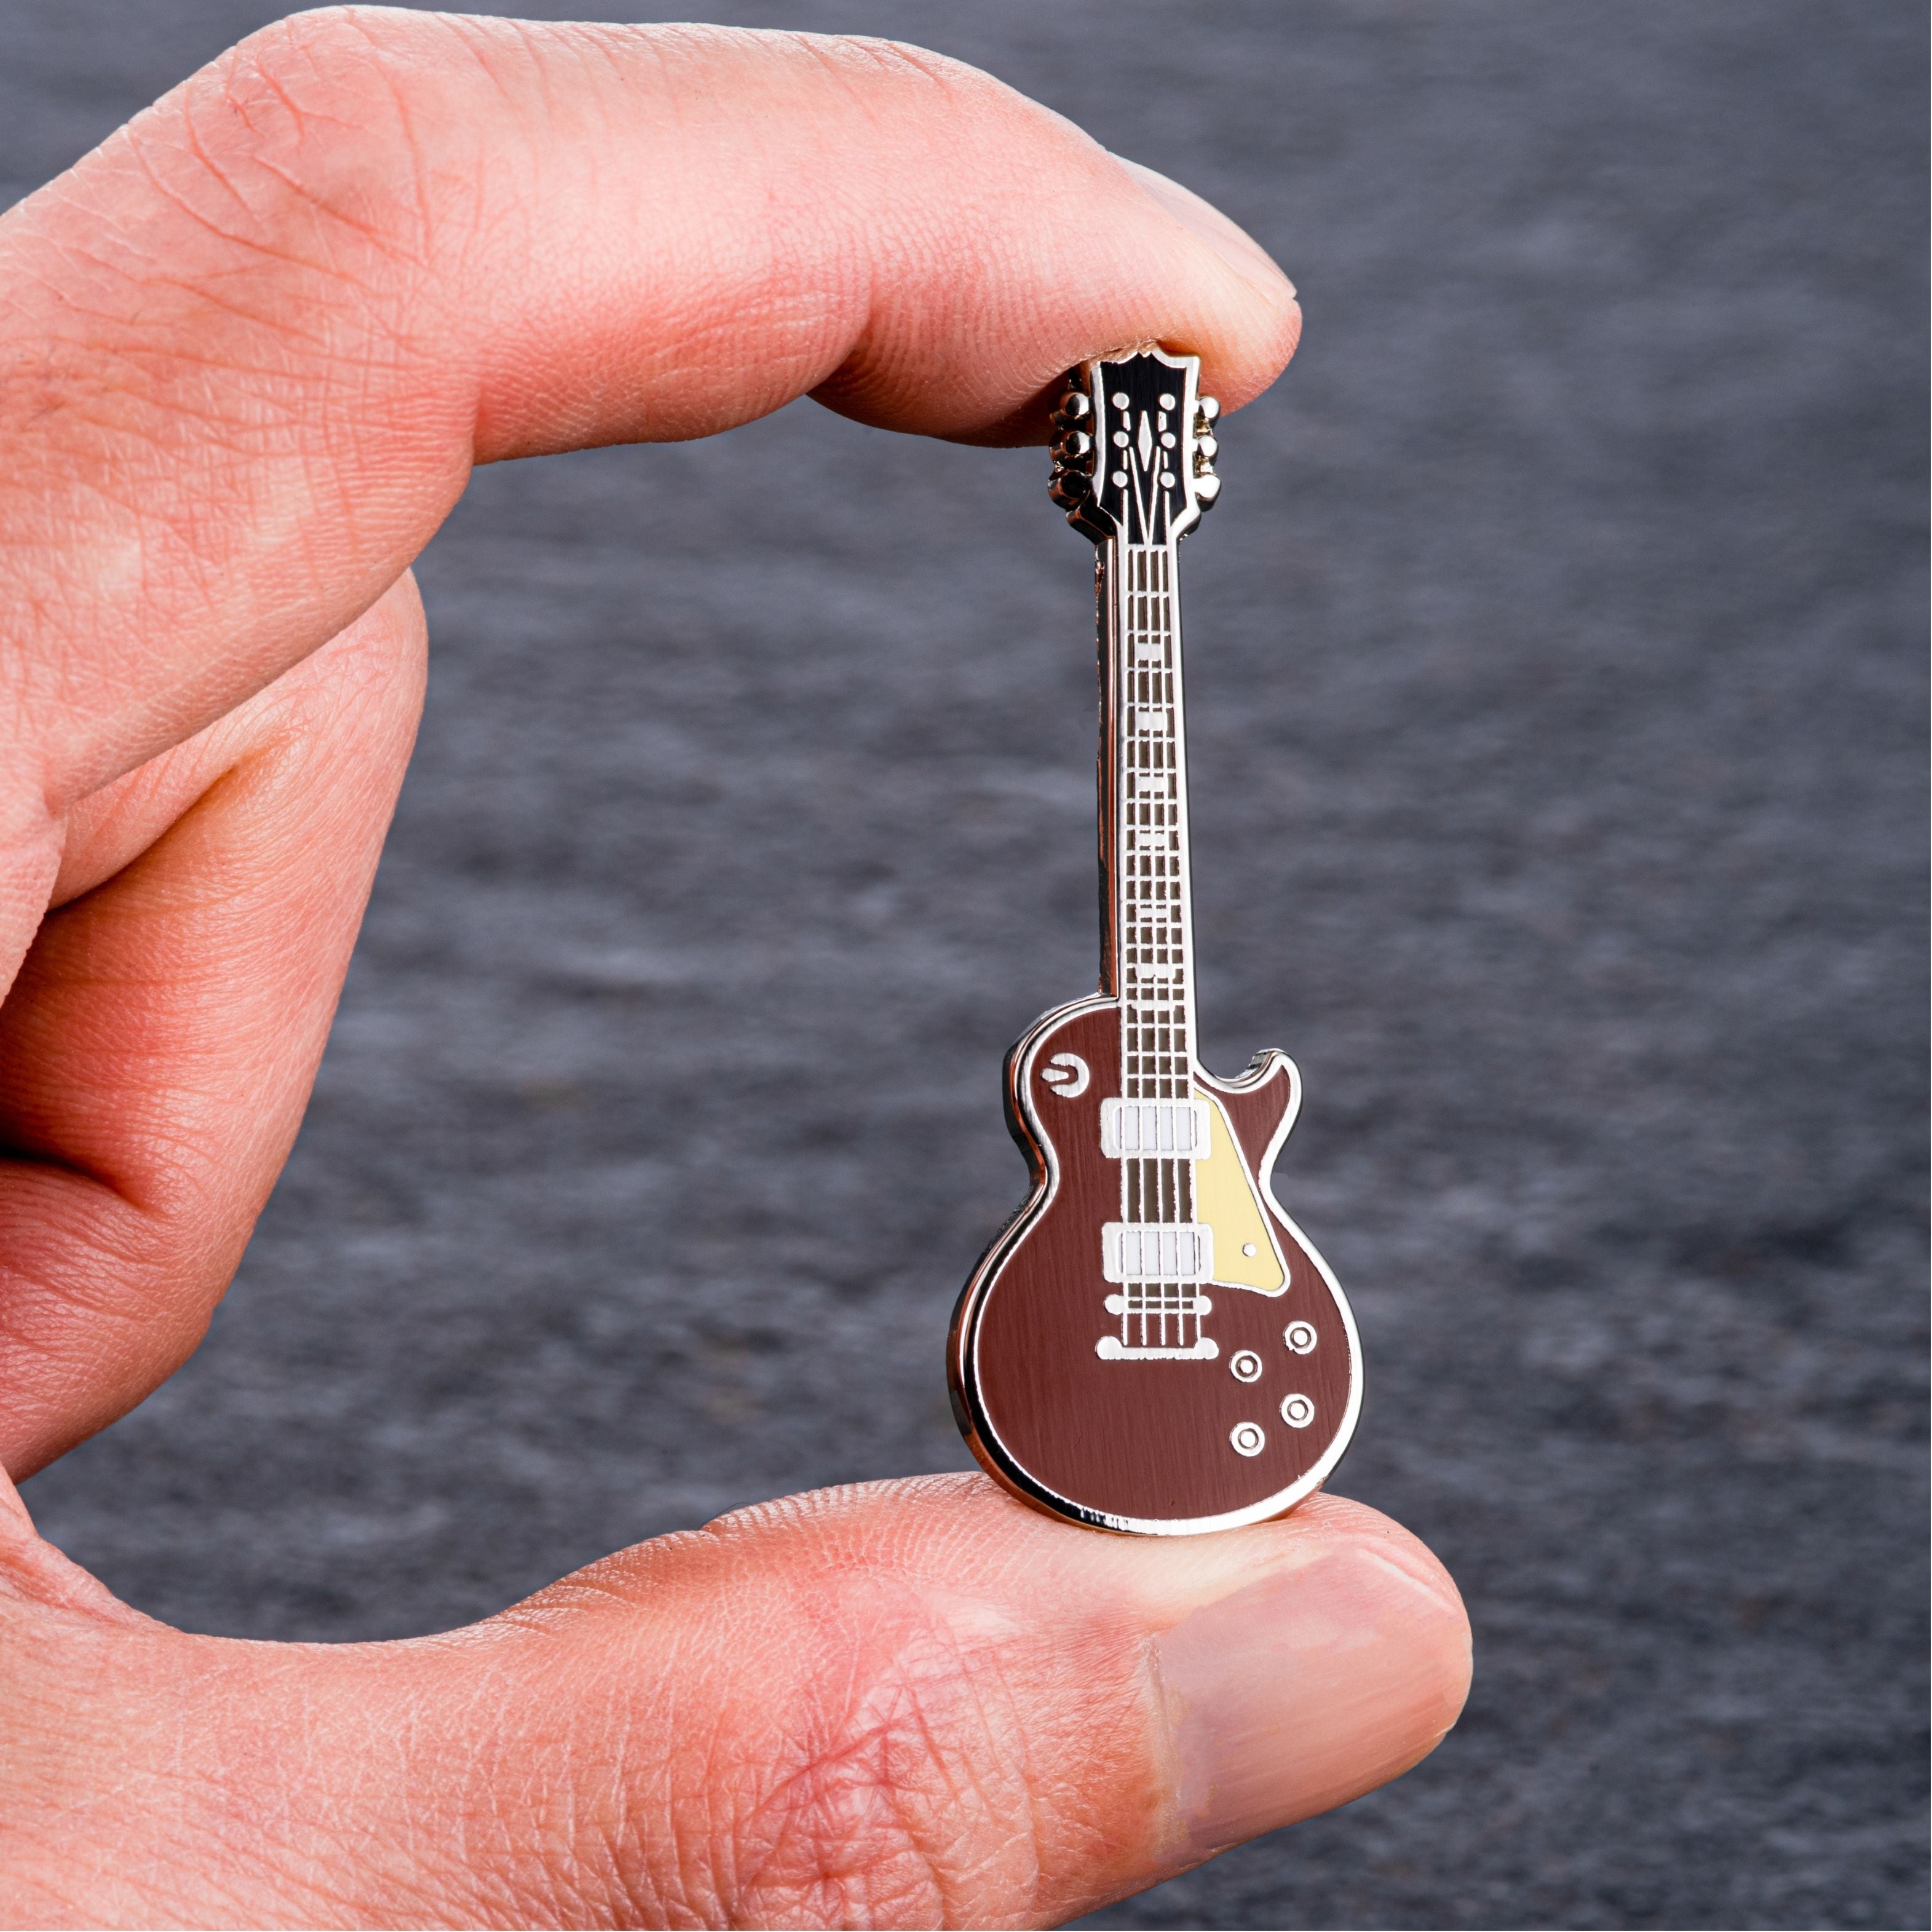 Geepin Les Paul Guitar Pin